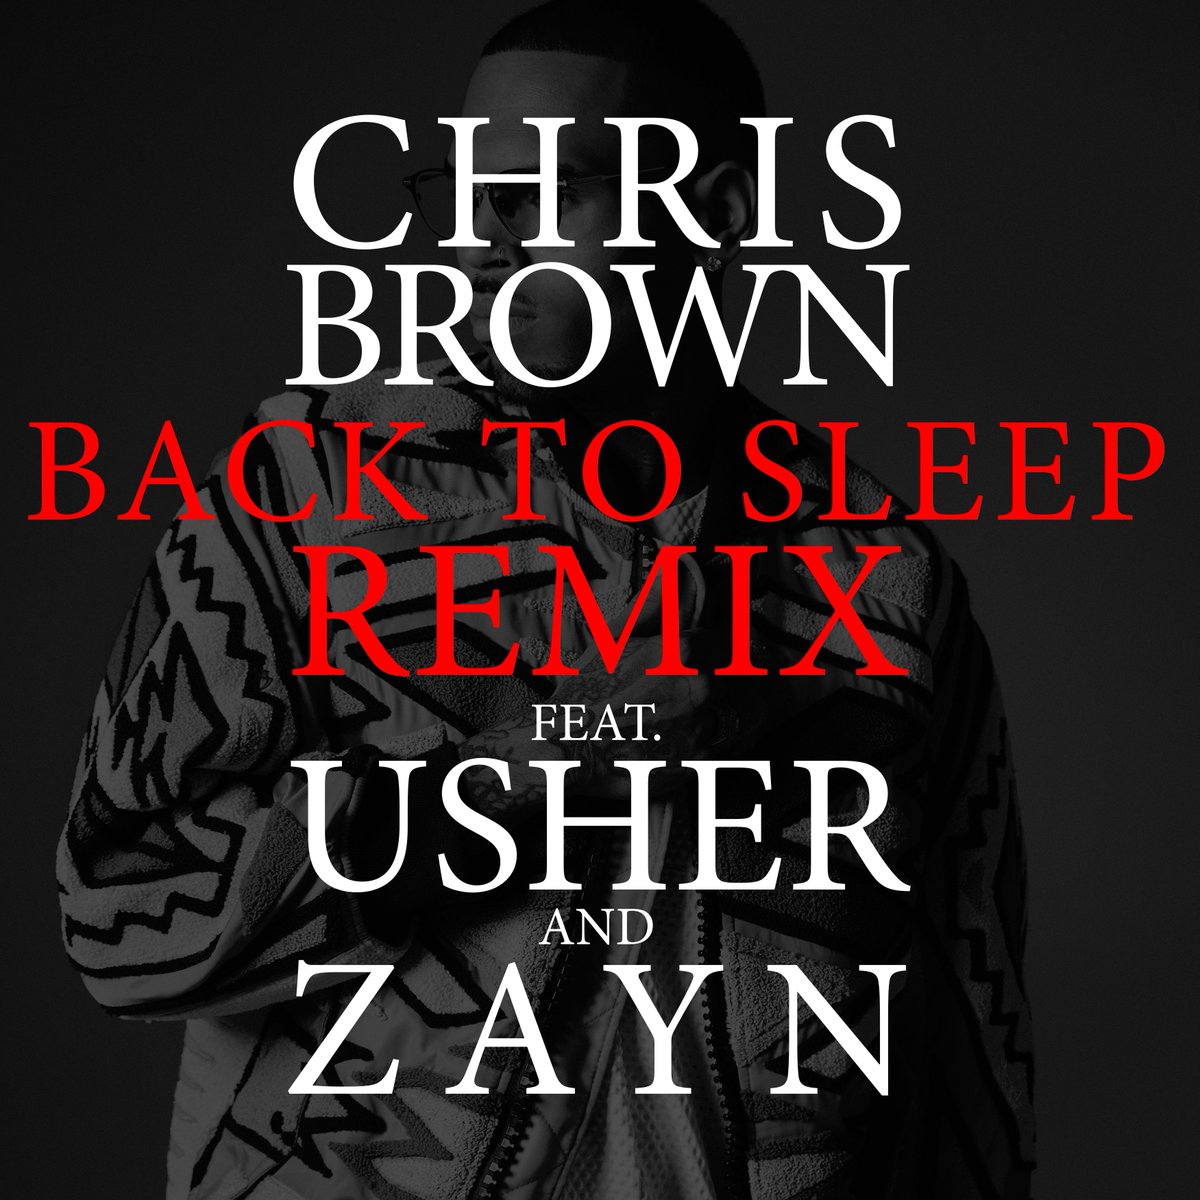 Had to jump on little bro @ChrisBrown's #BackToSleep remix. What ya'll think? ????????https://t.co/pMYQstwCBn https://t.co/uokXLbj2sa